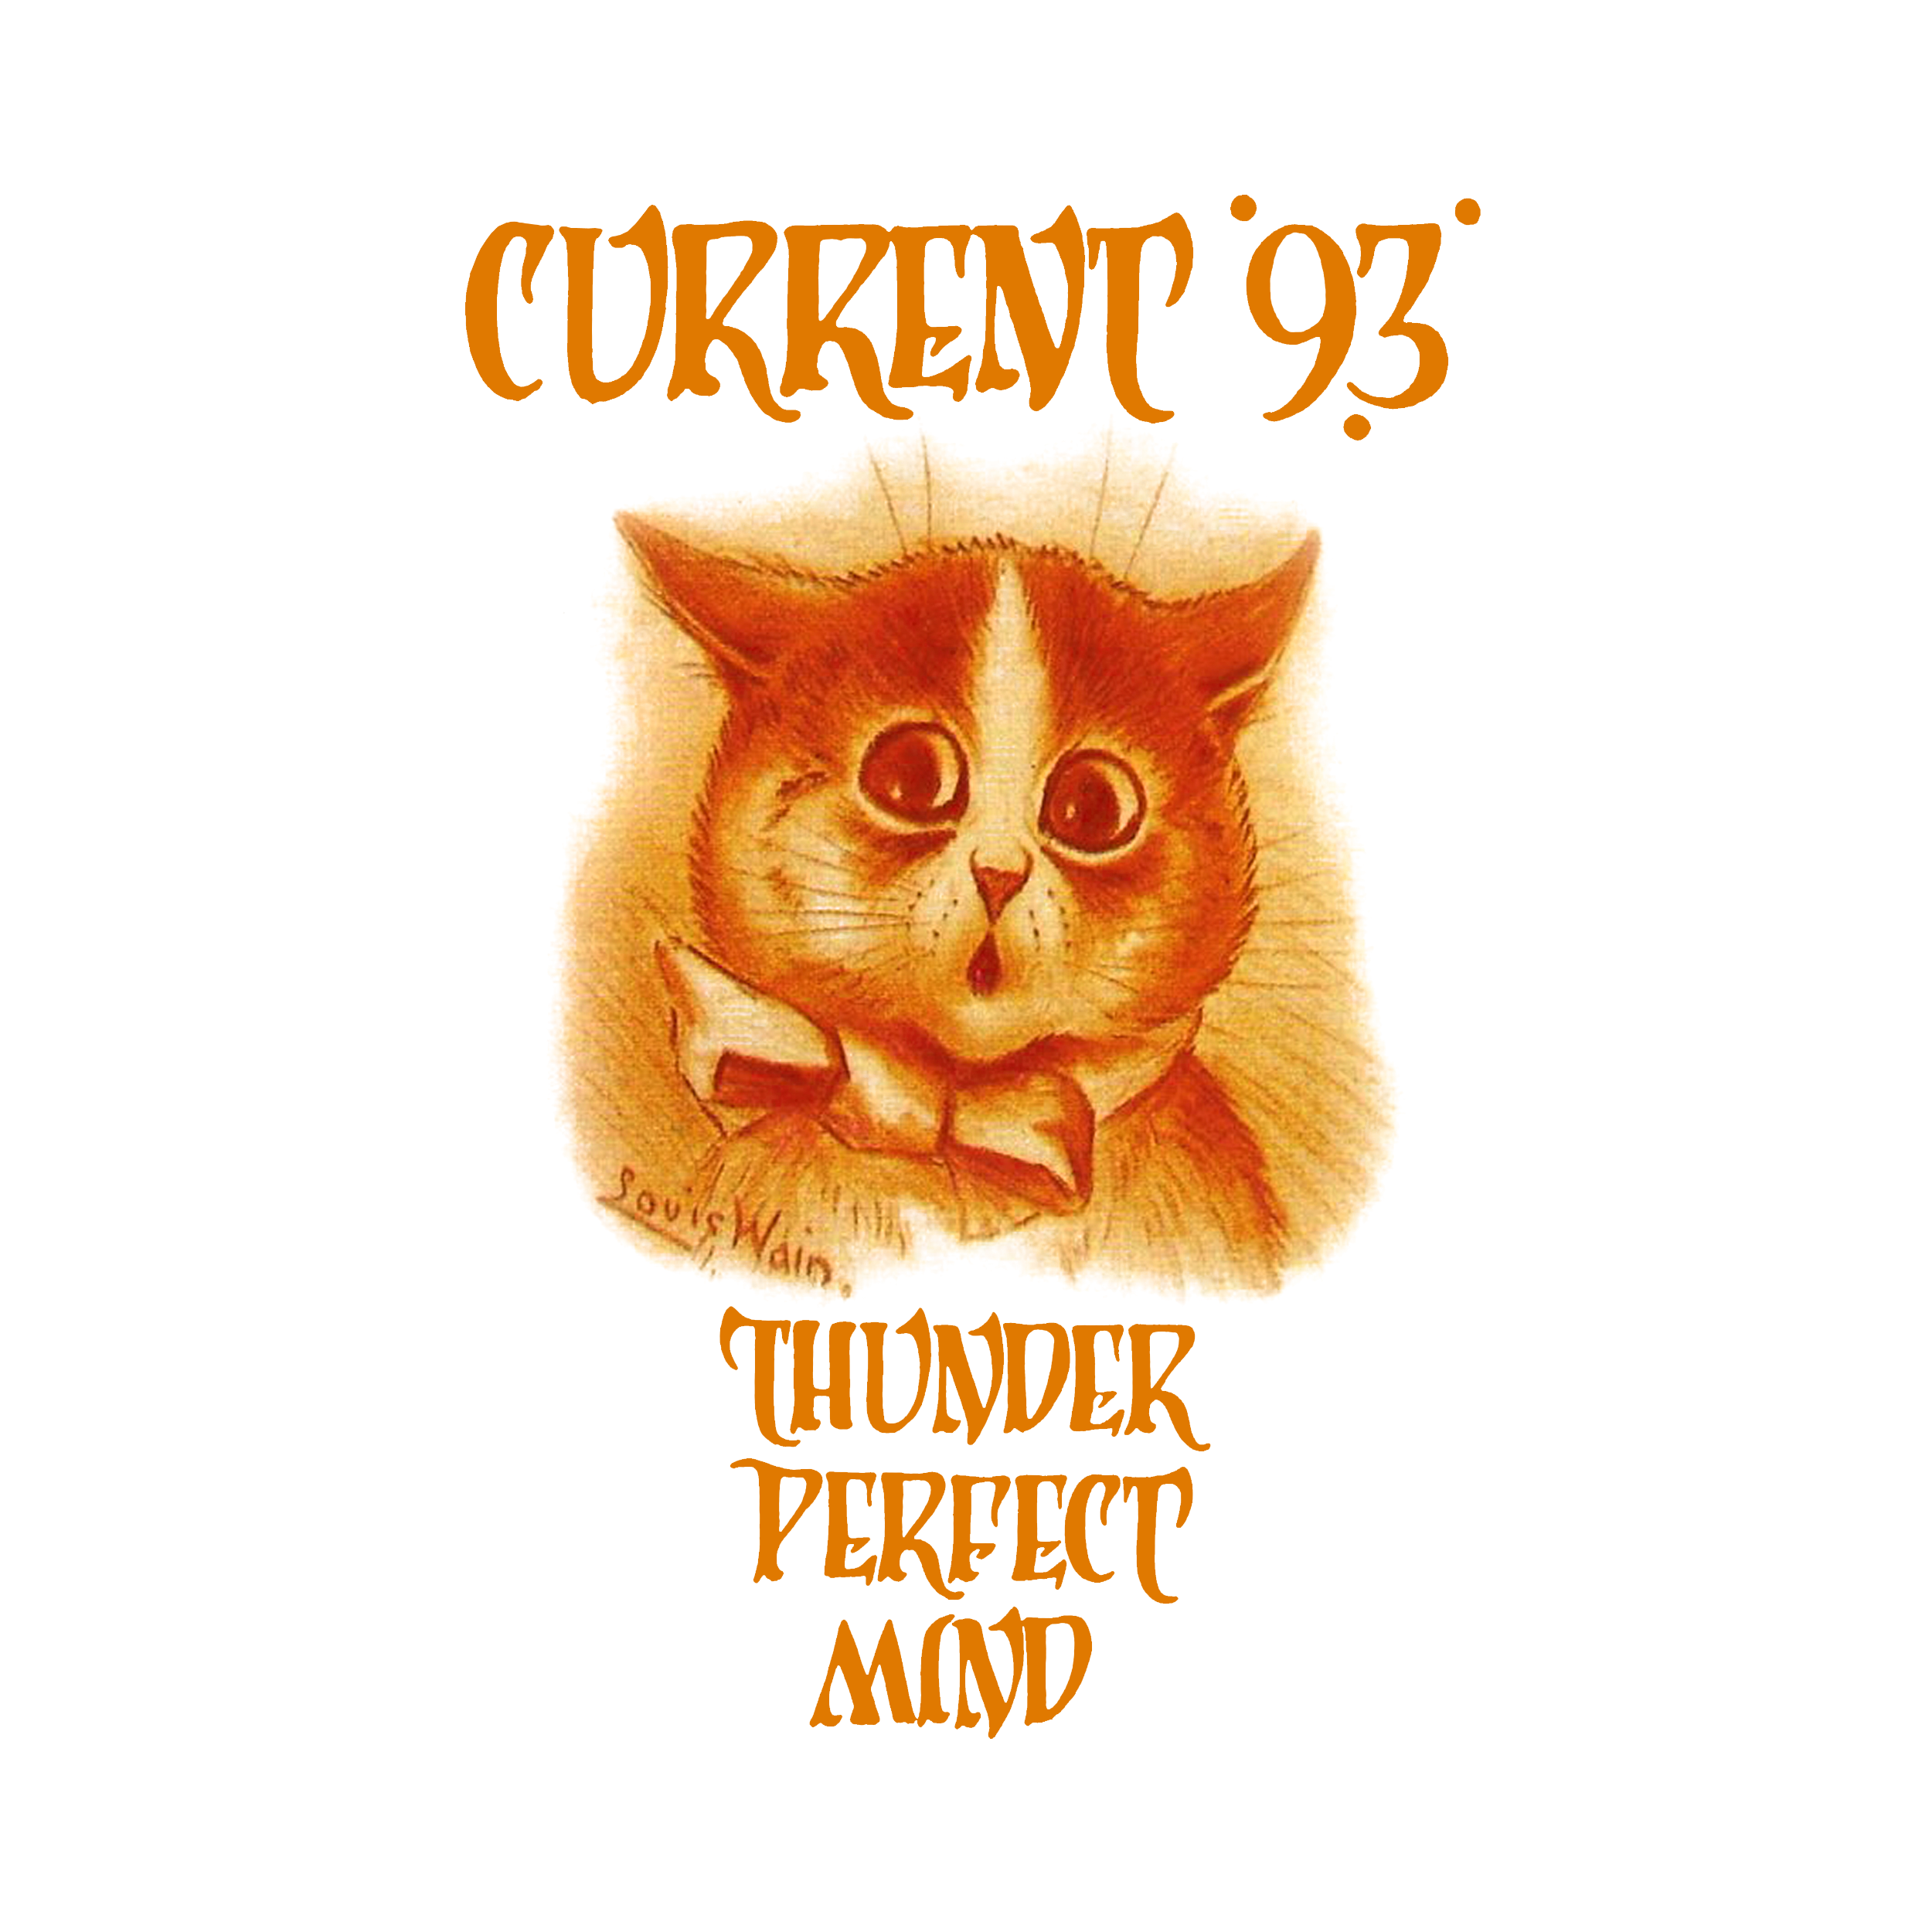 Current 93 Thunder Perfect Mind Premium Tee